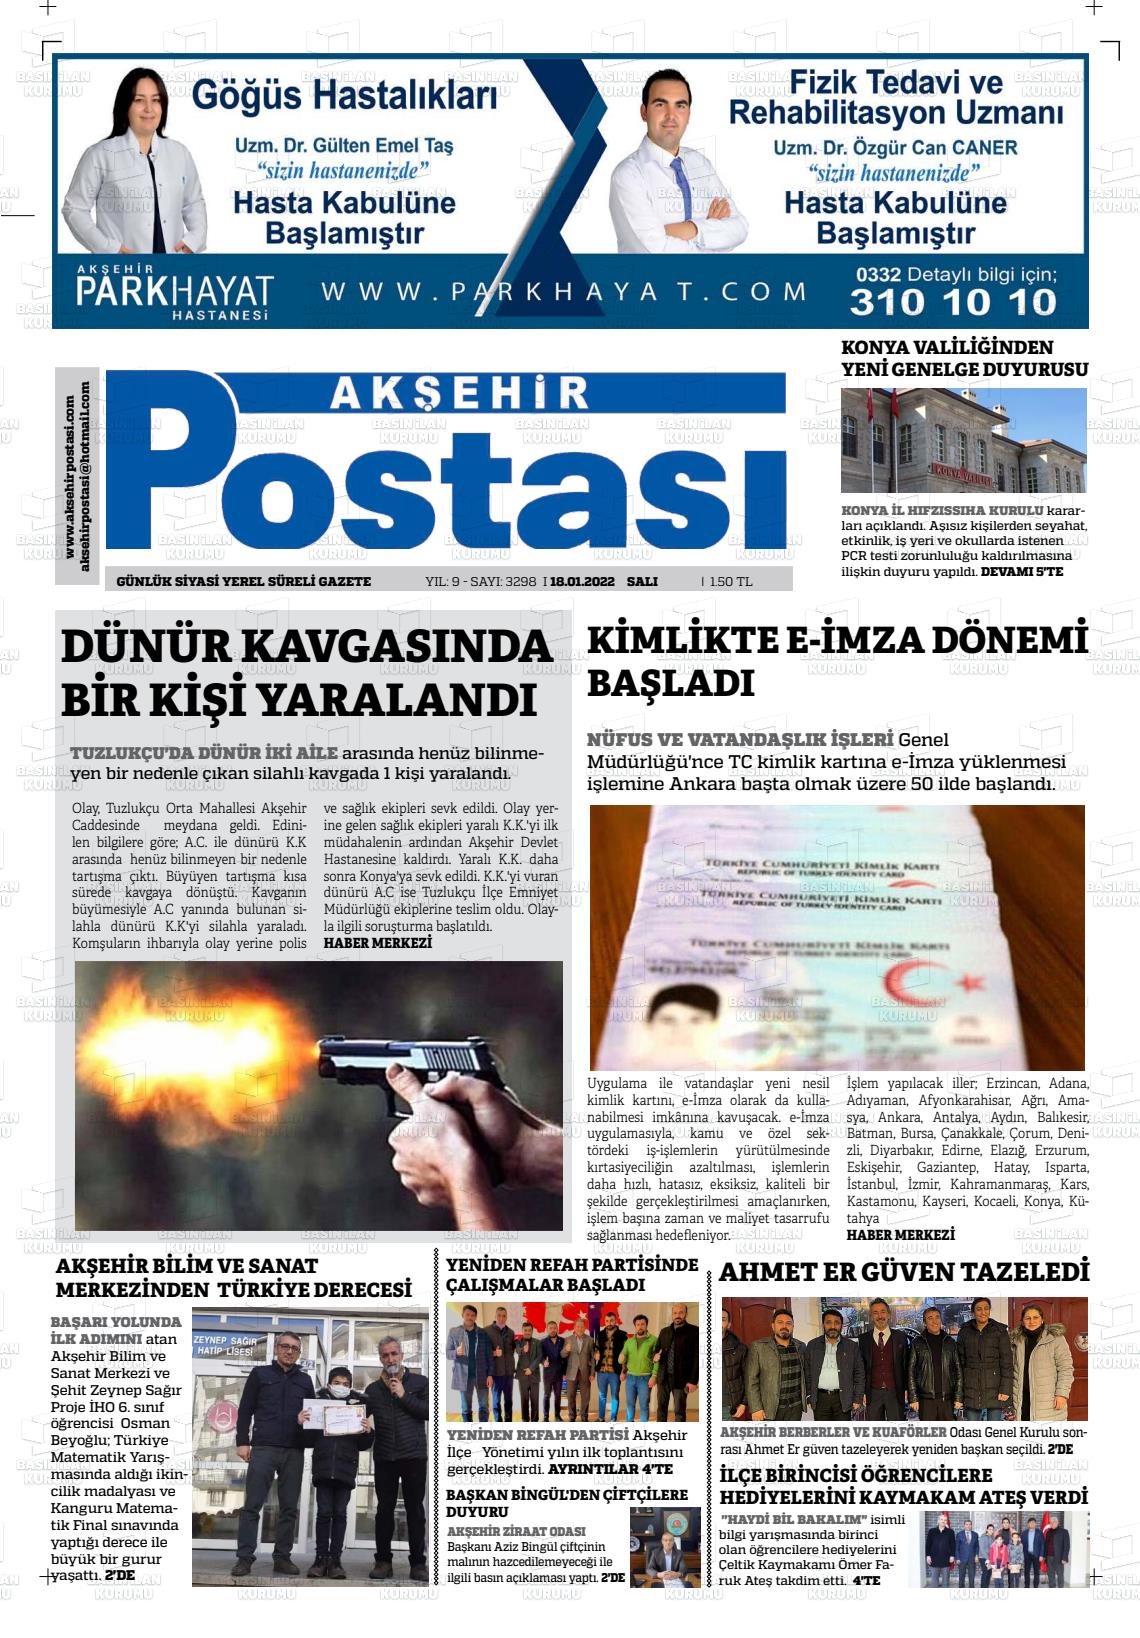 18 Ocak 2022 Akşehir Postasi Gazete Manşeti